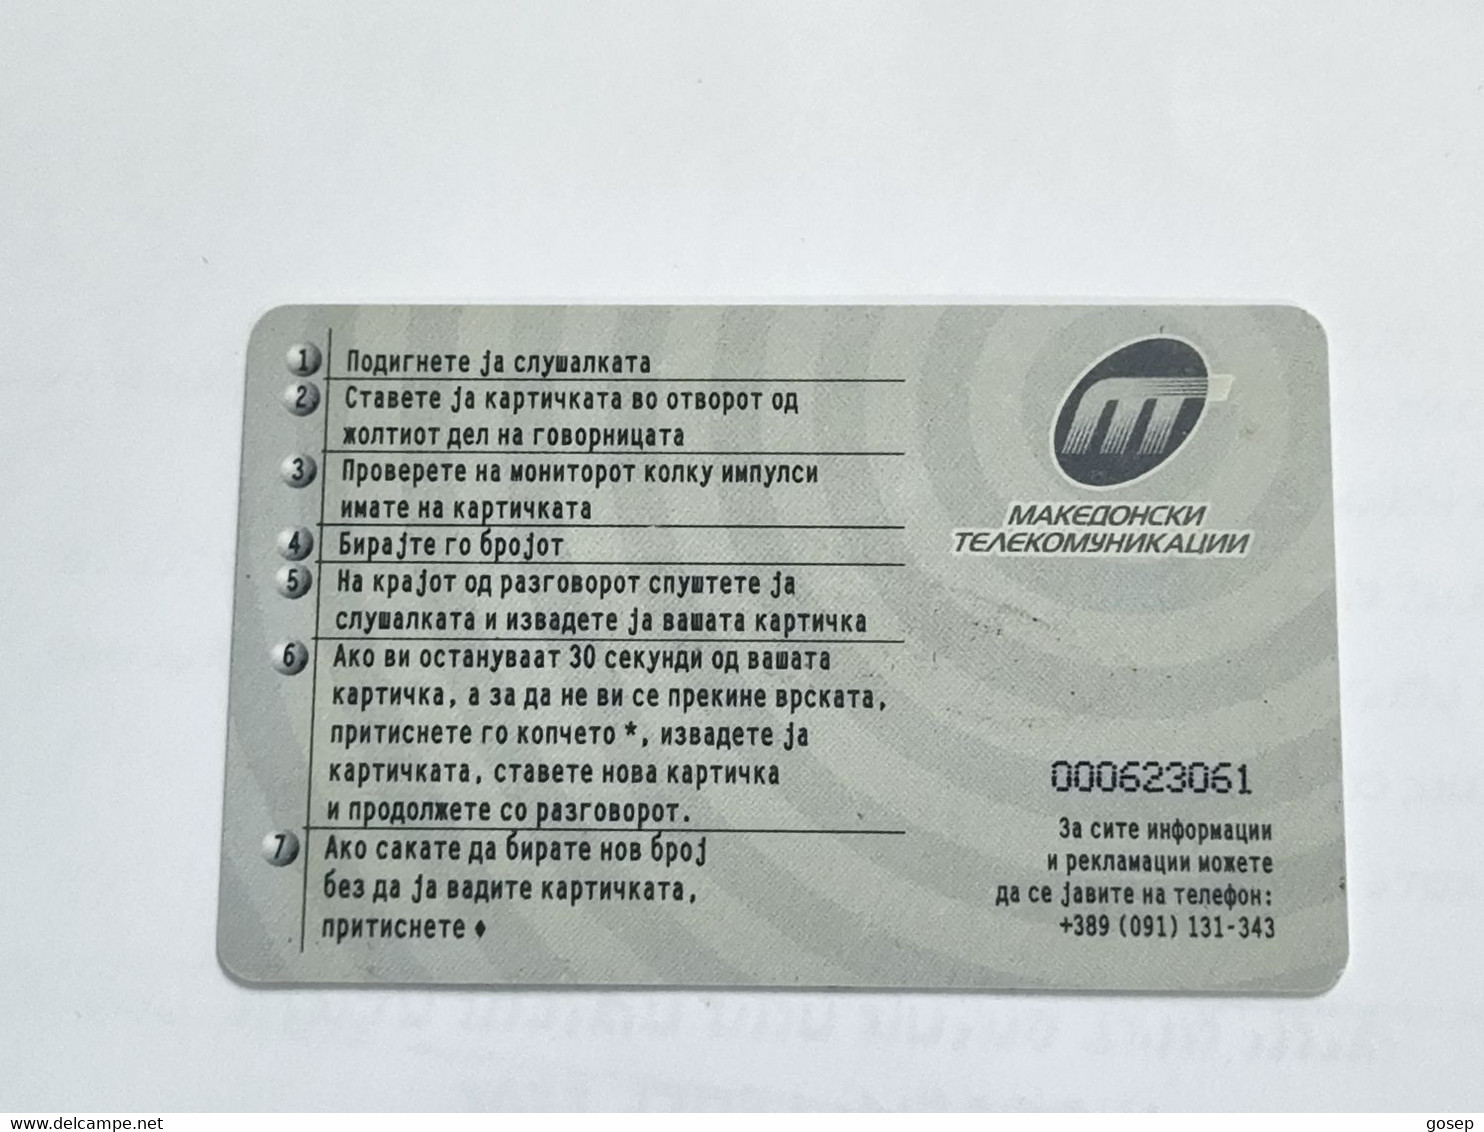 Macedonia-(MK-MAT-0008A)-Modern Technolog-(7)-(9/98)-(200units)-(000623061)-tirage-2.000-used Card+1card Prepiad Free - Macedonia Del Norte